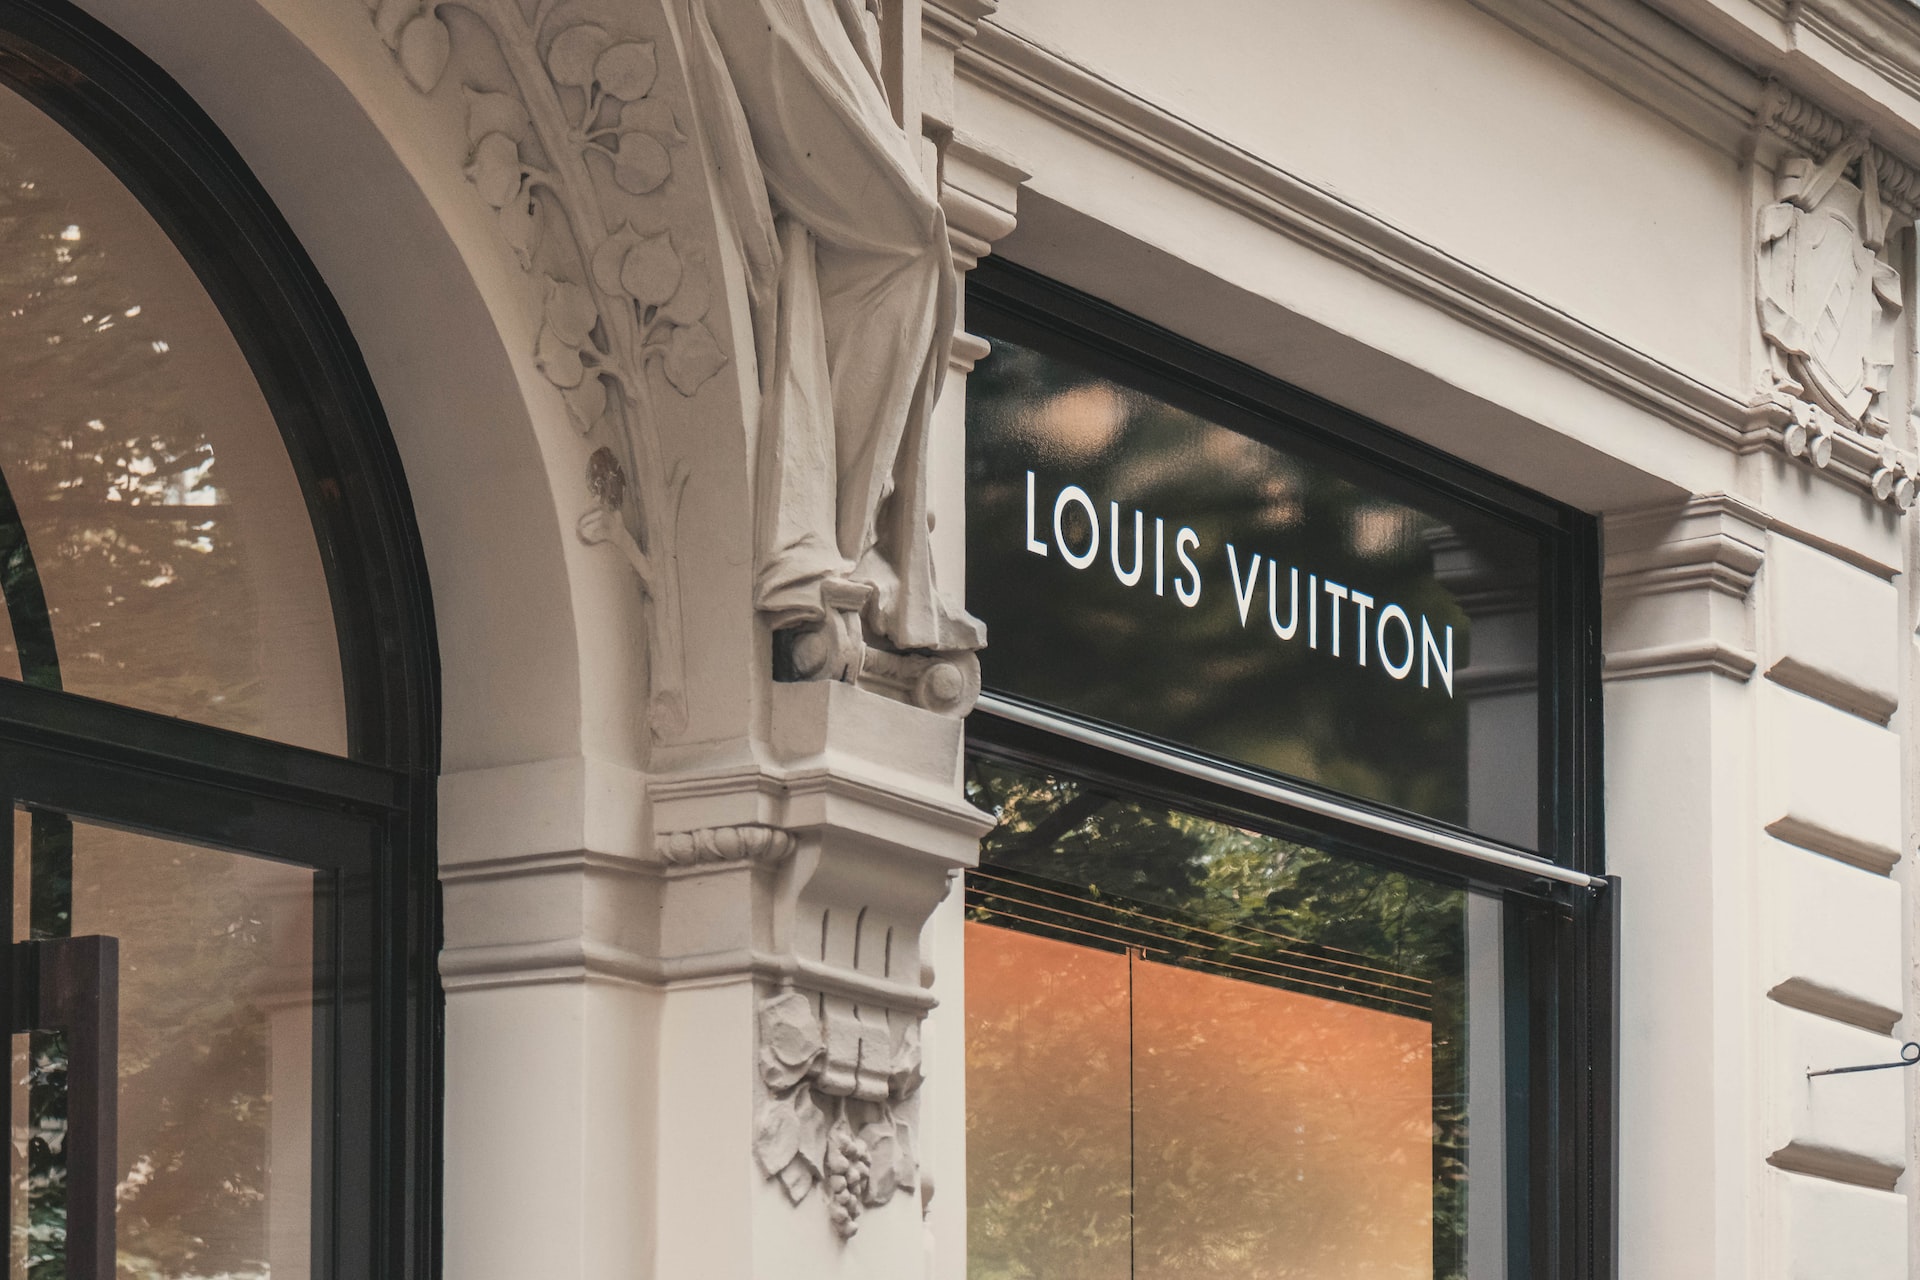 Following Louis Vuitton partnership, Riot Games is avoiding brand